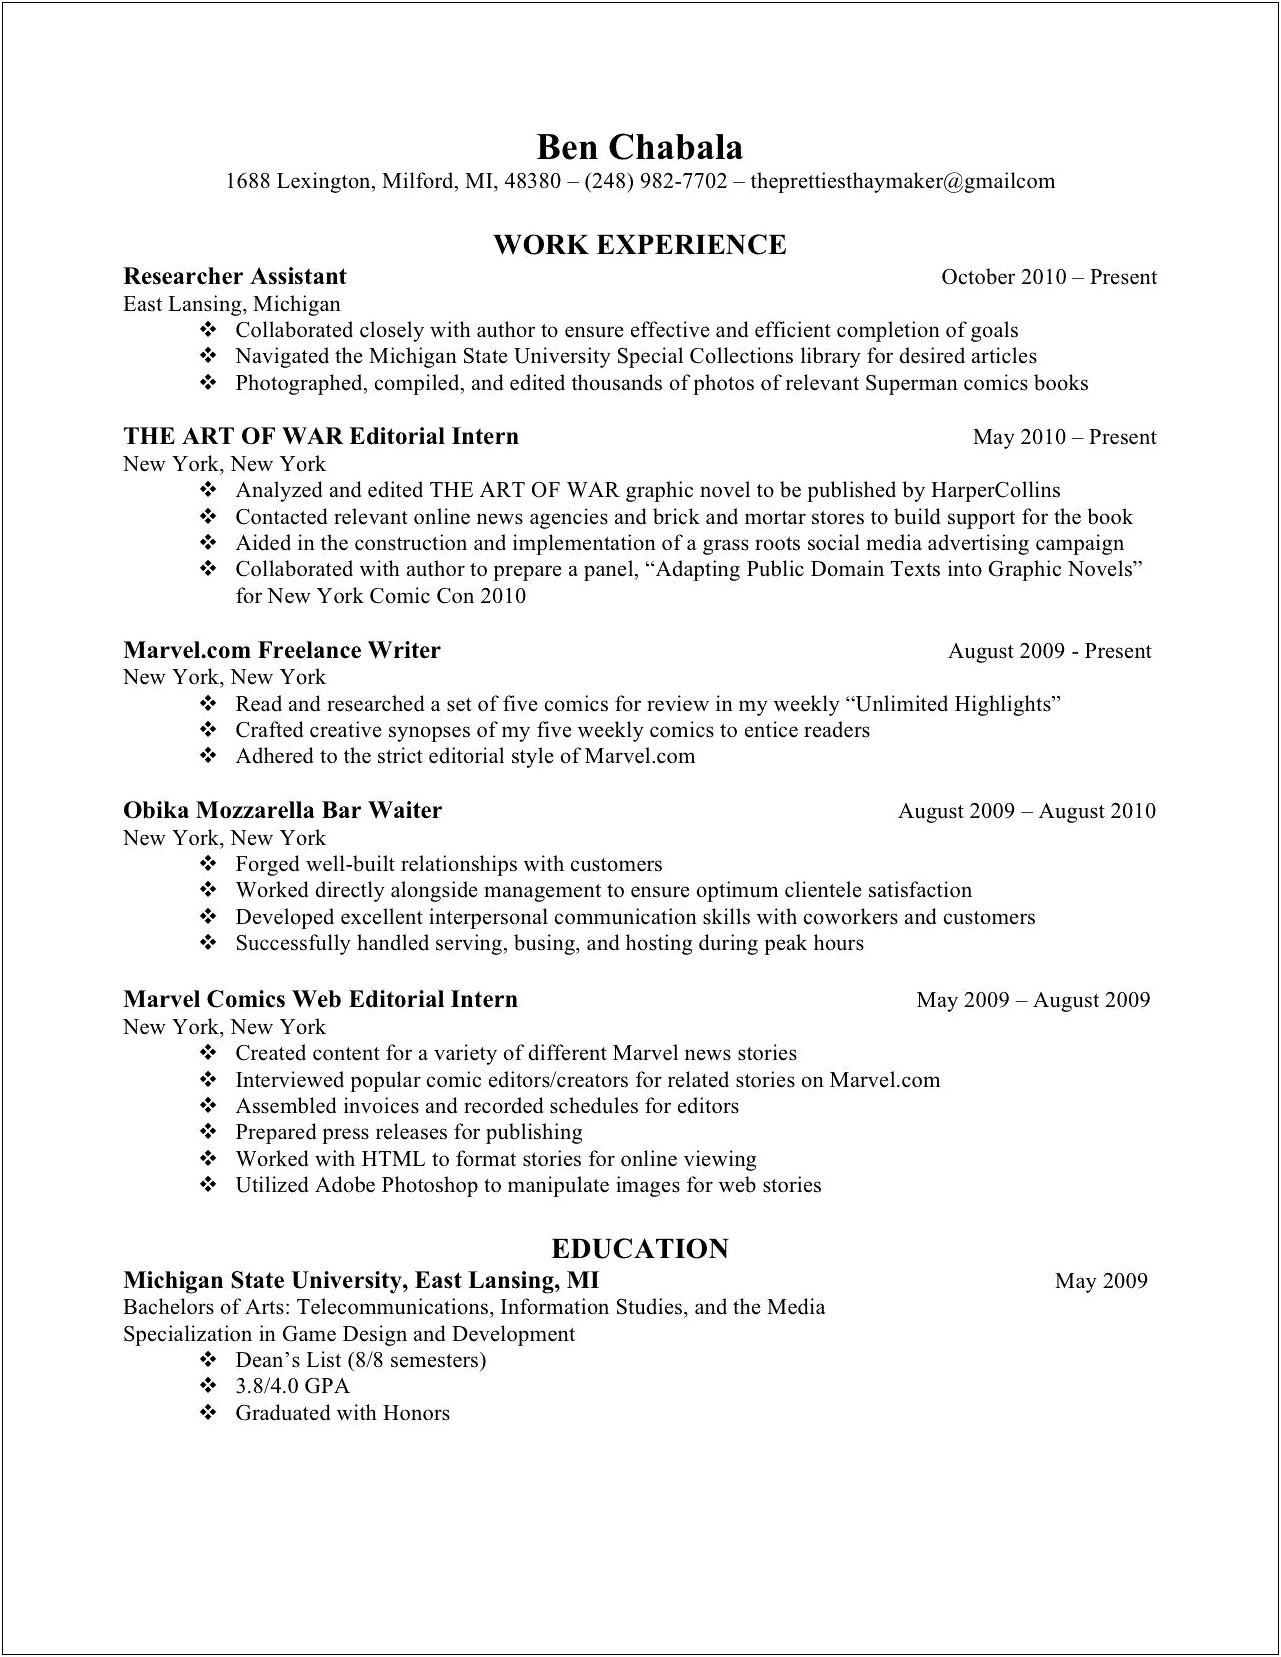 Listing Graduate School Work Experience Resume